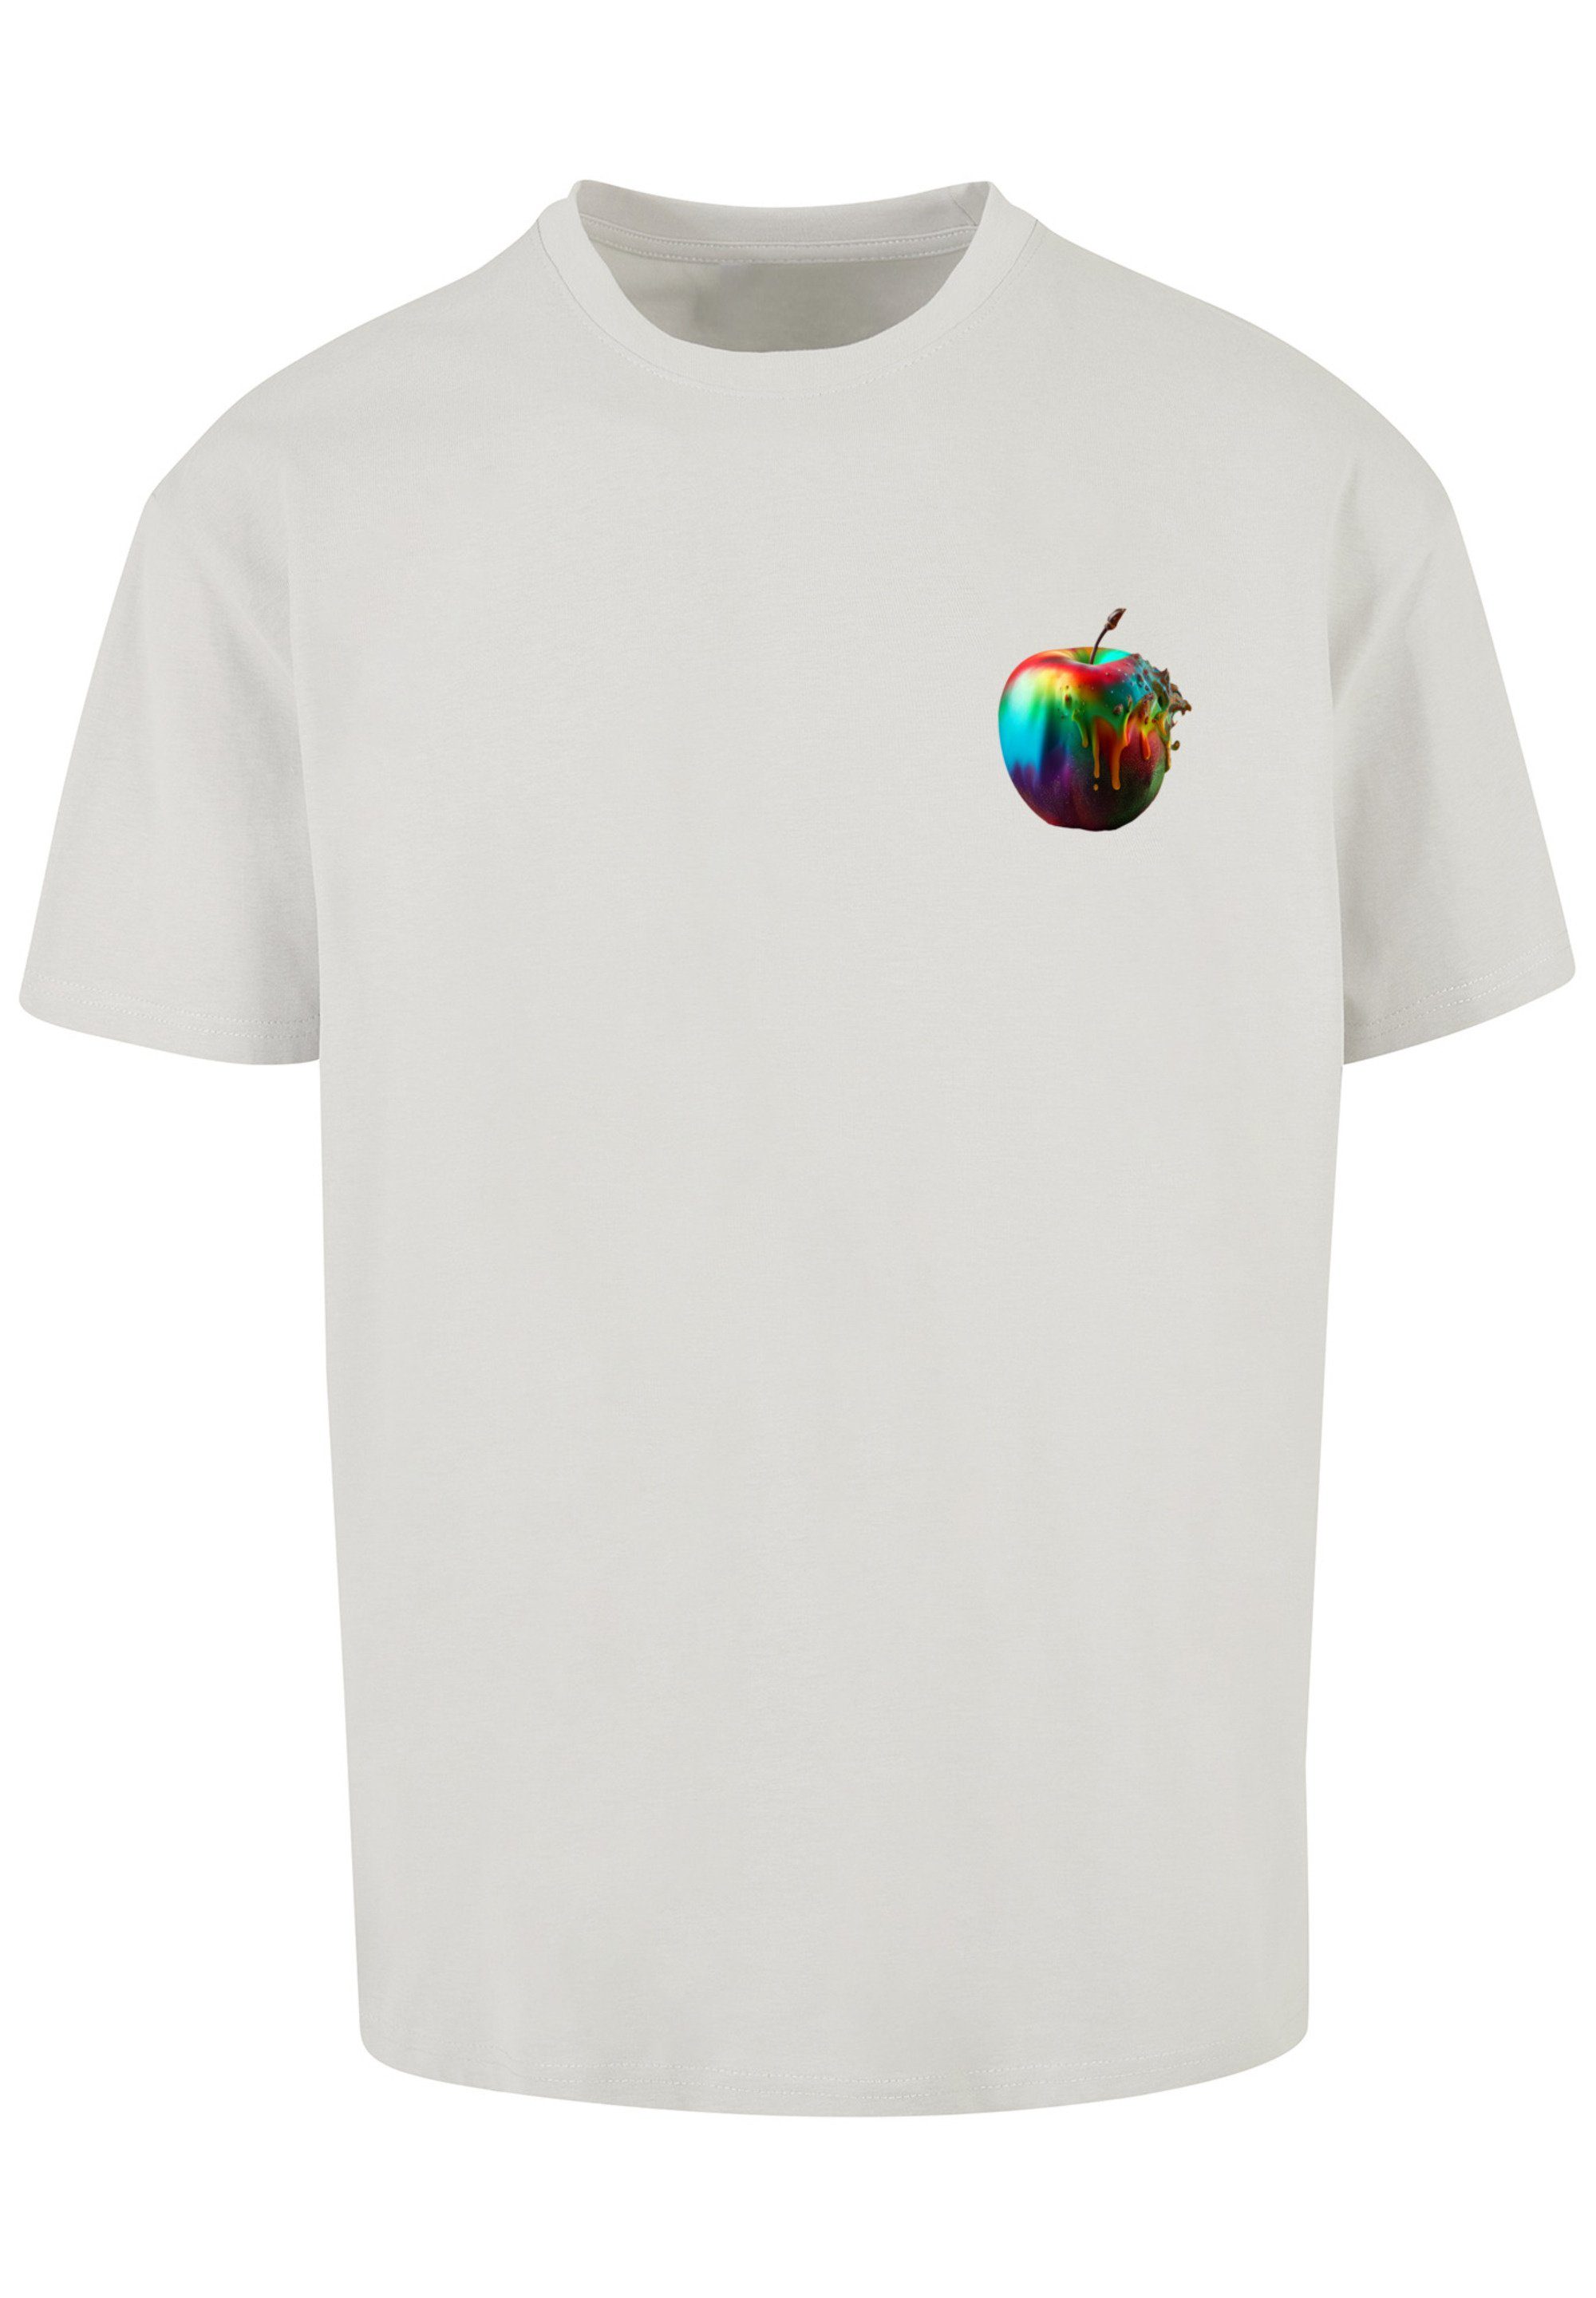 F4NT4STIC T-Shirt Apple Print Colorfood lightasphalt Rainbow Collection 